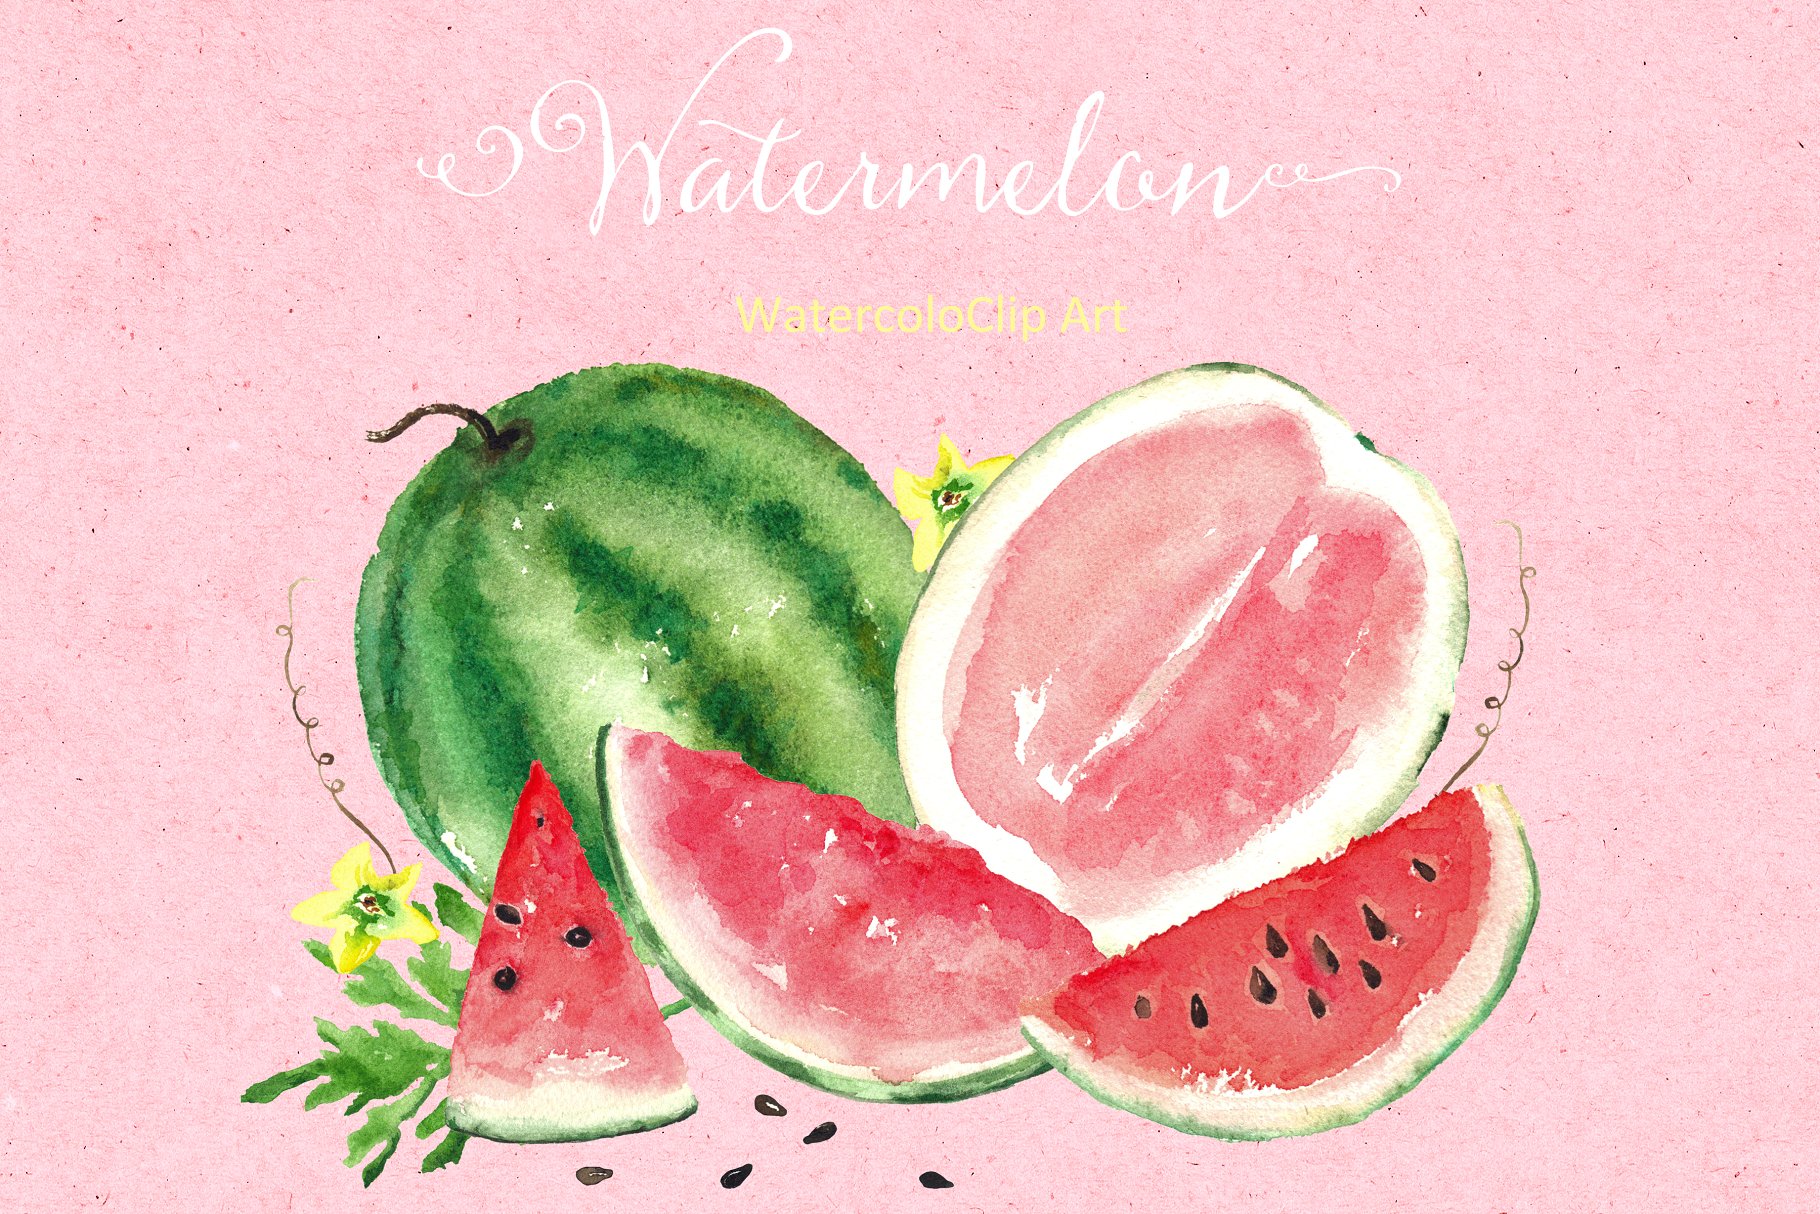 西瓜水彩剪贴画素材 Watermelon watercolor clipart插图